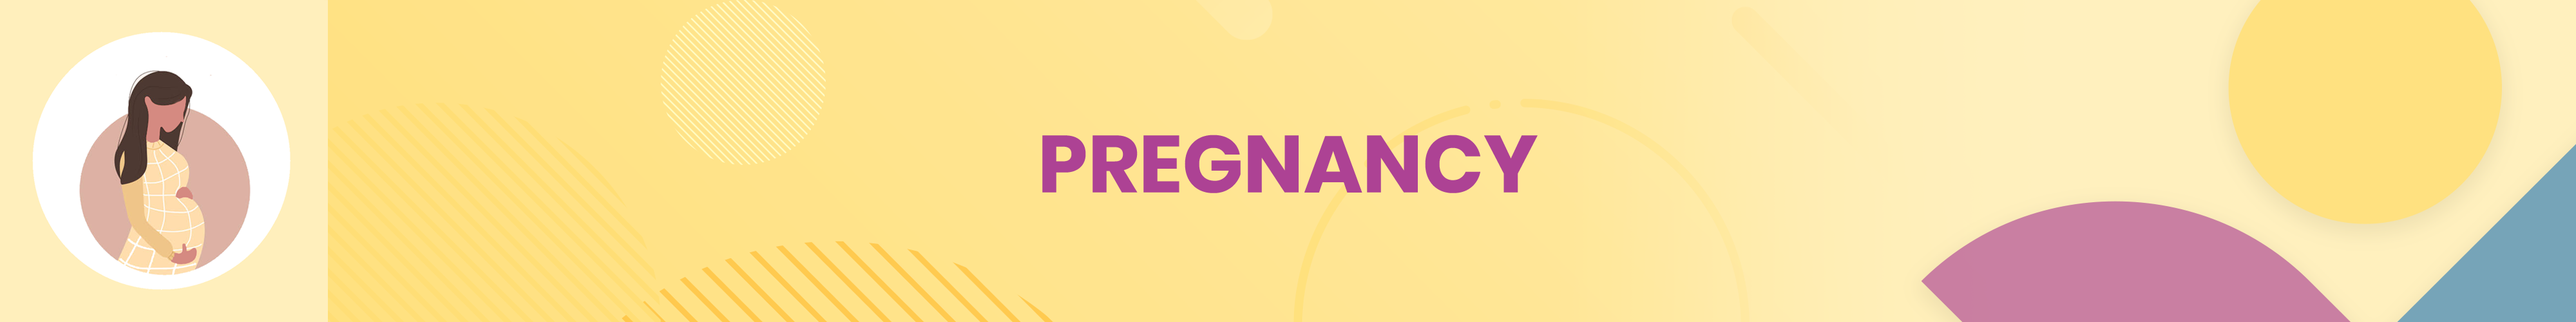 Pregnancy home page header